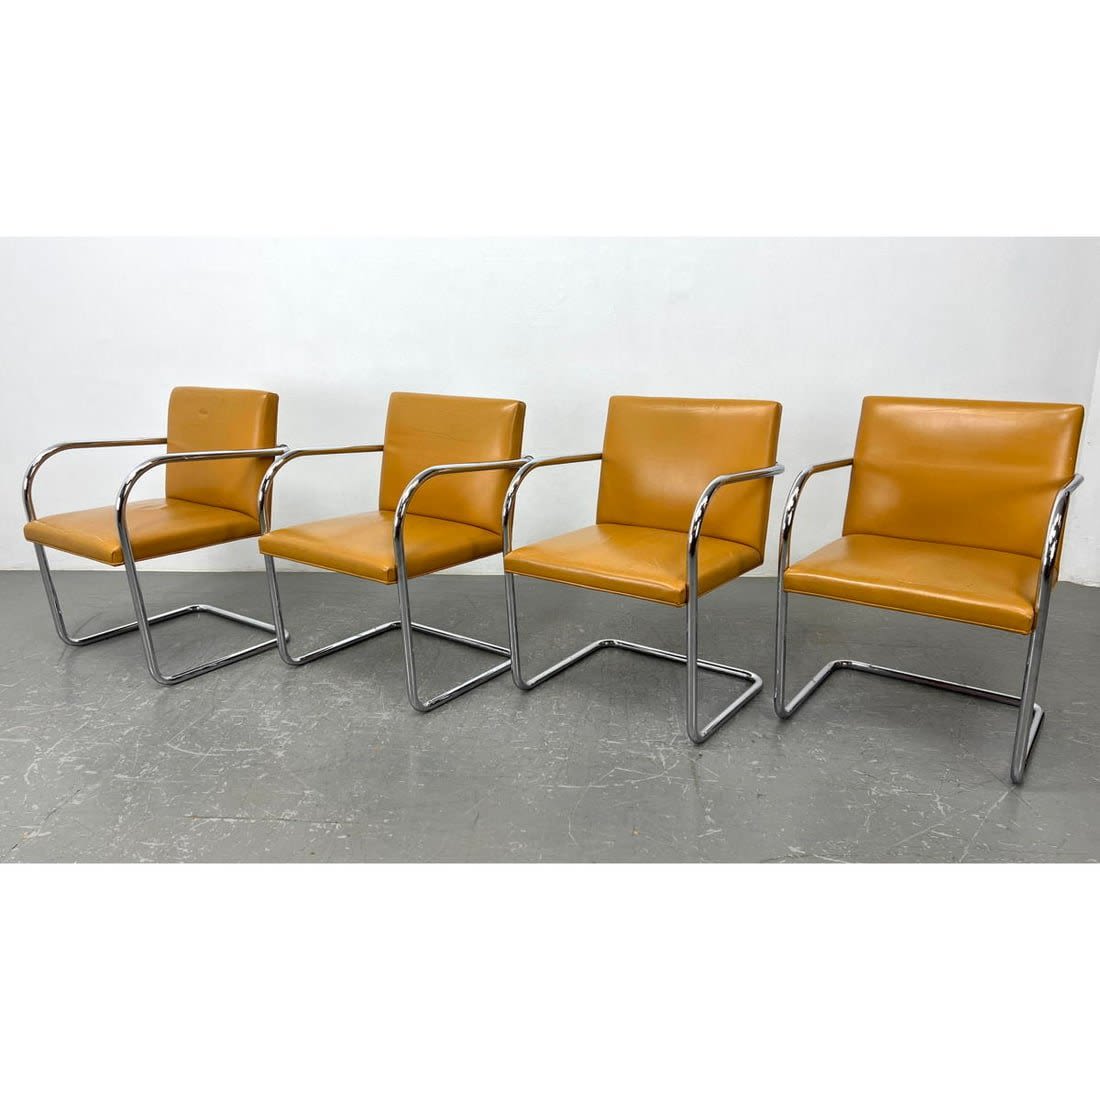 Set 4 Knoll Brno Chairs by Mies 3cf281